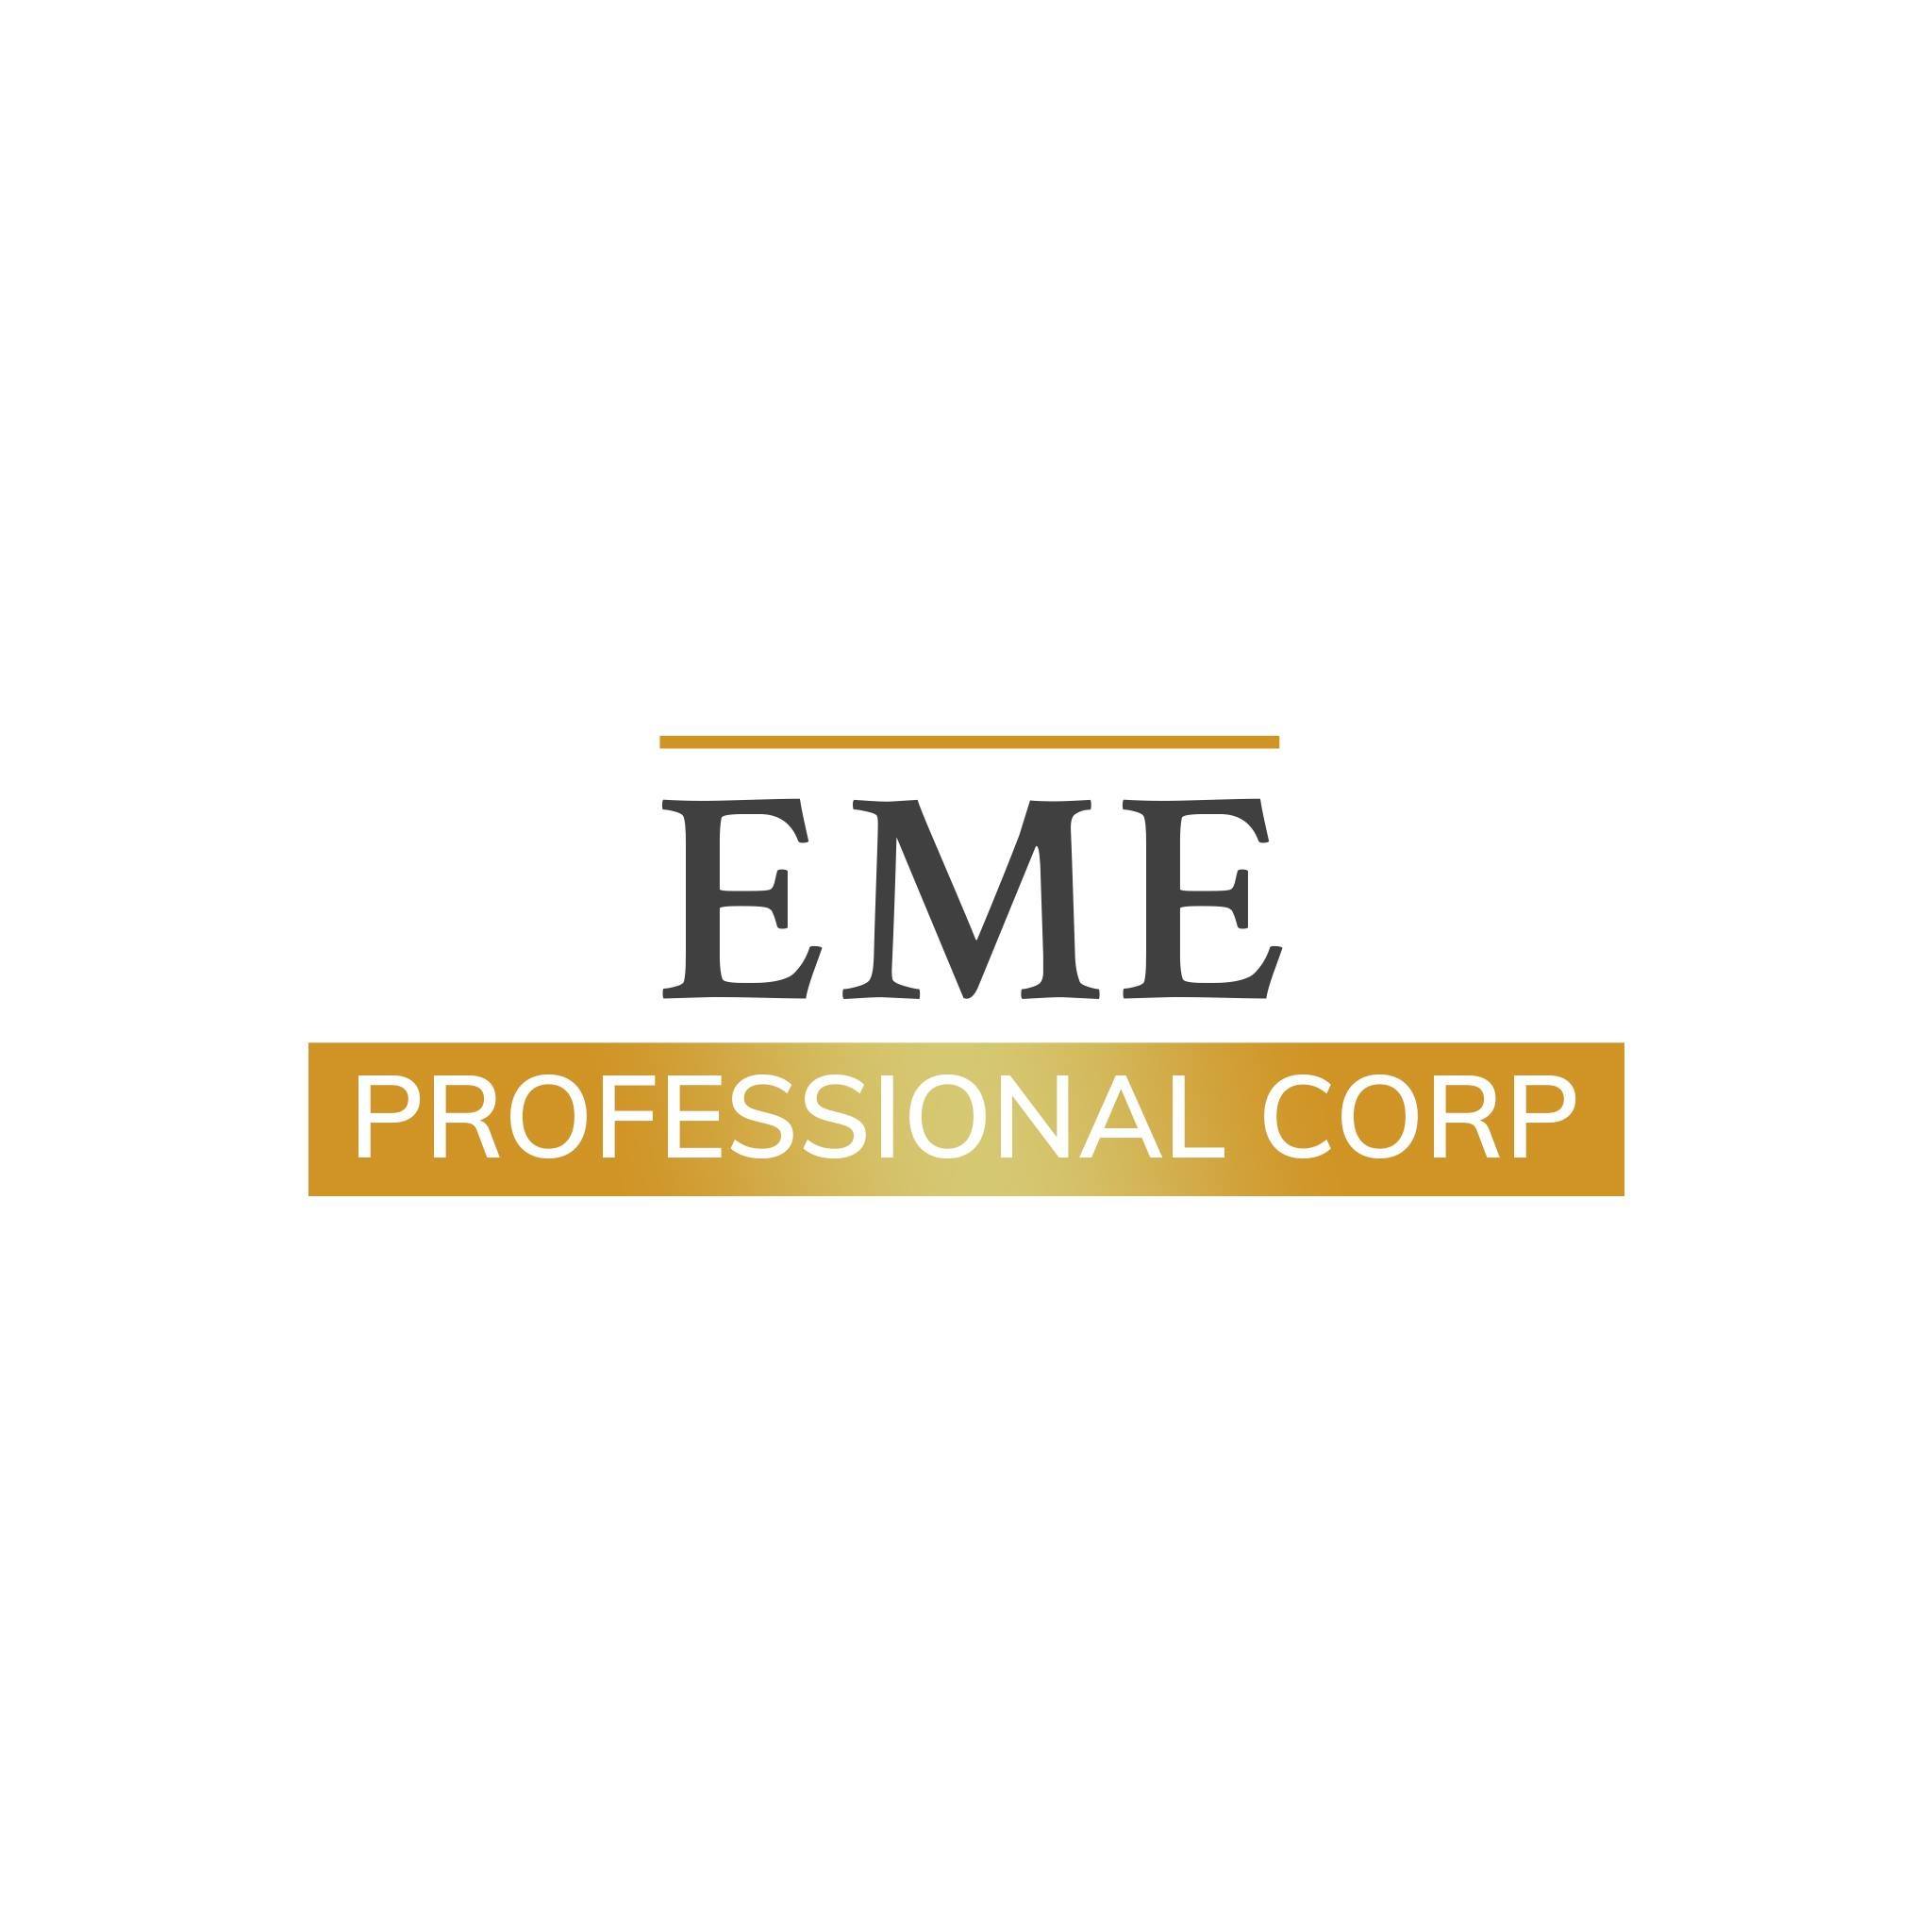 EME Professional Corp.